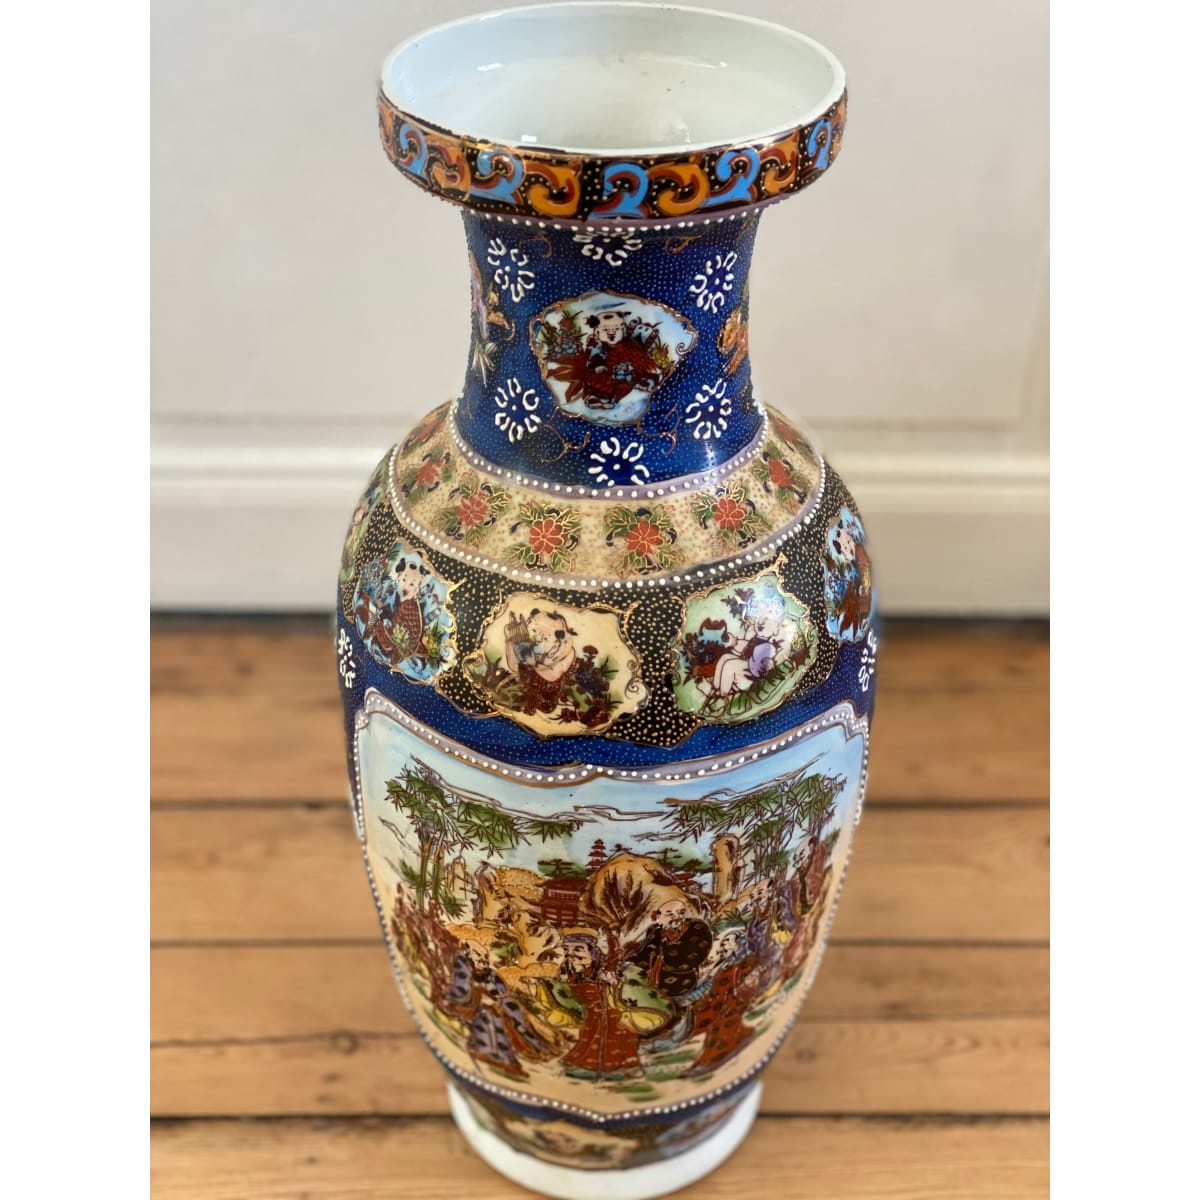 Grand vase de style chinois